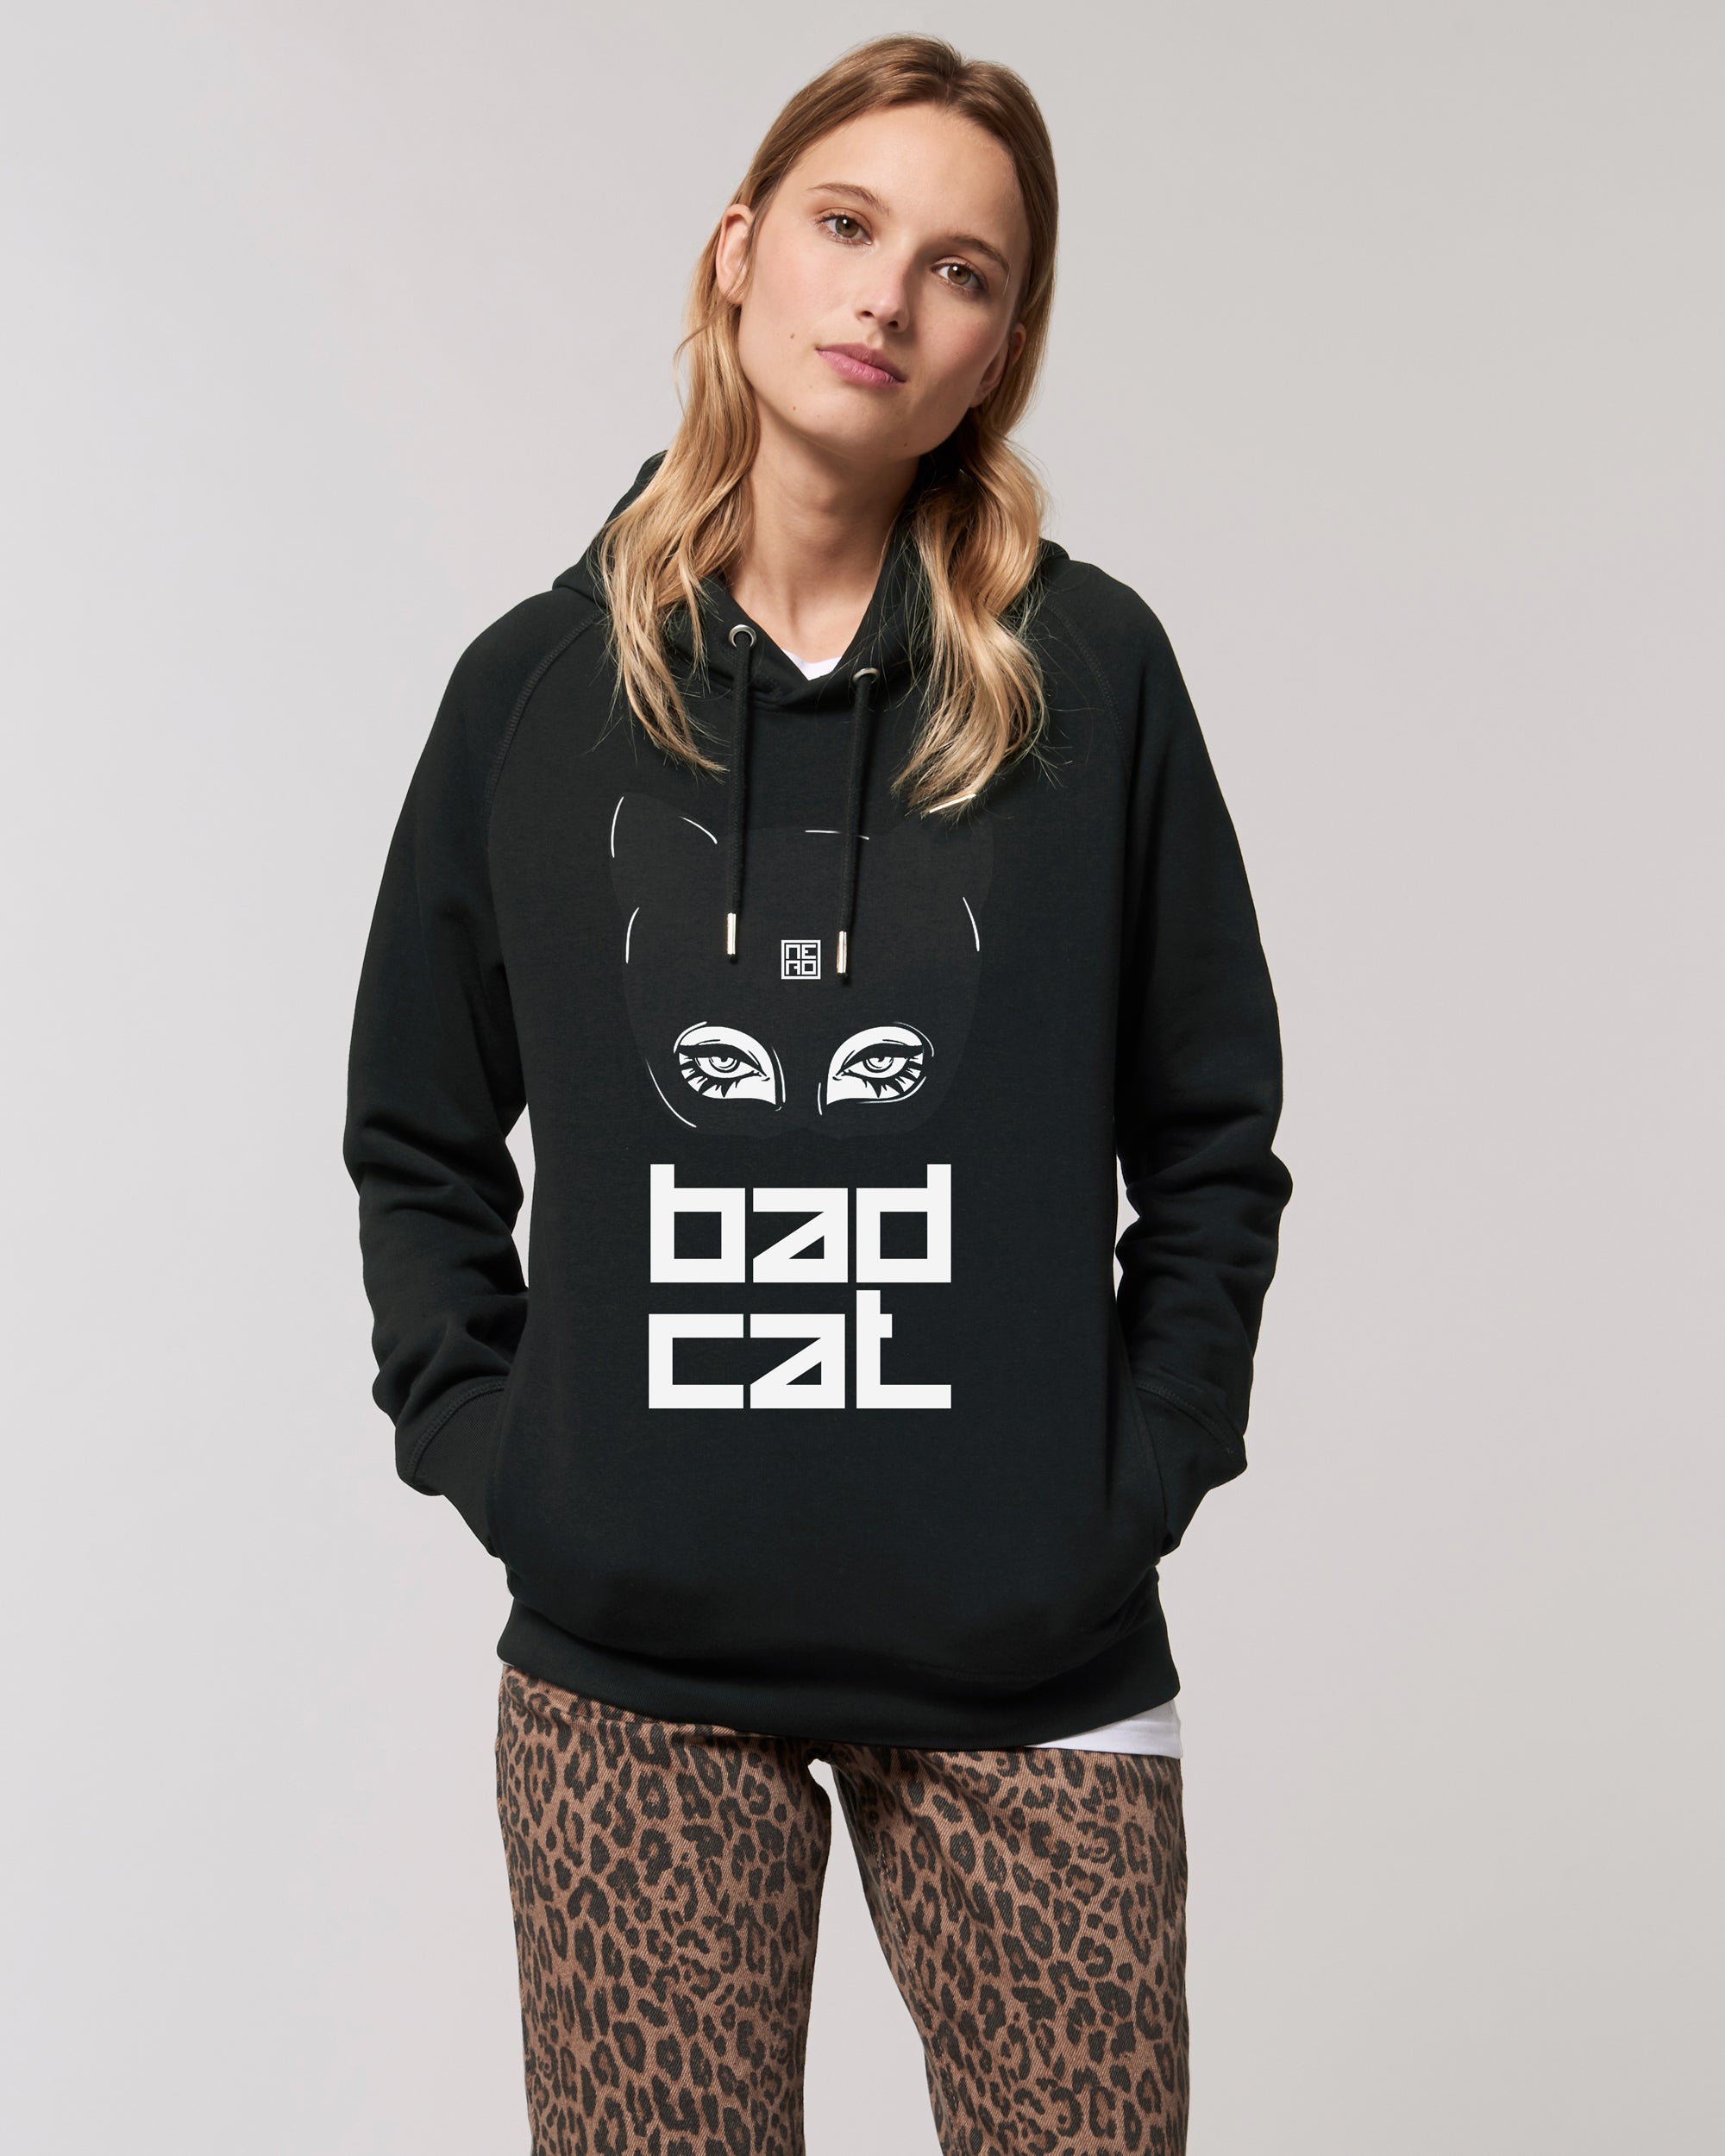 Bad Cat woman - Unisex side-pocket Premium hoodie for Women